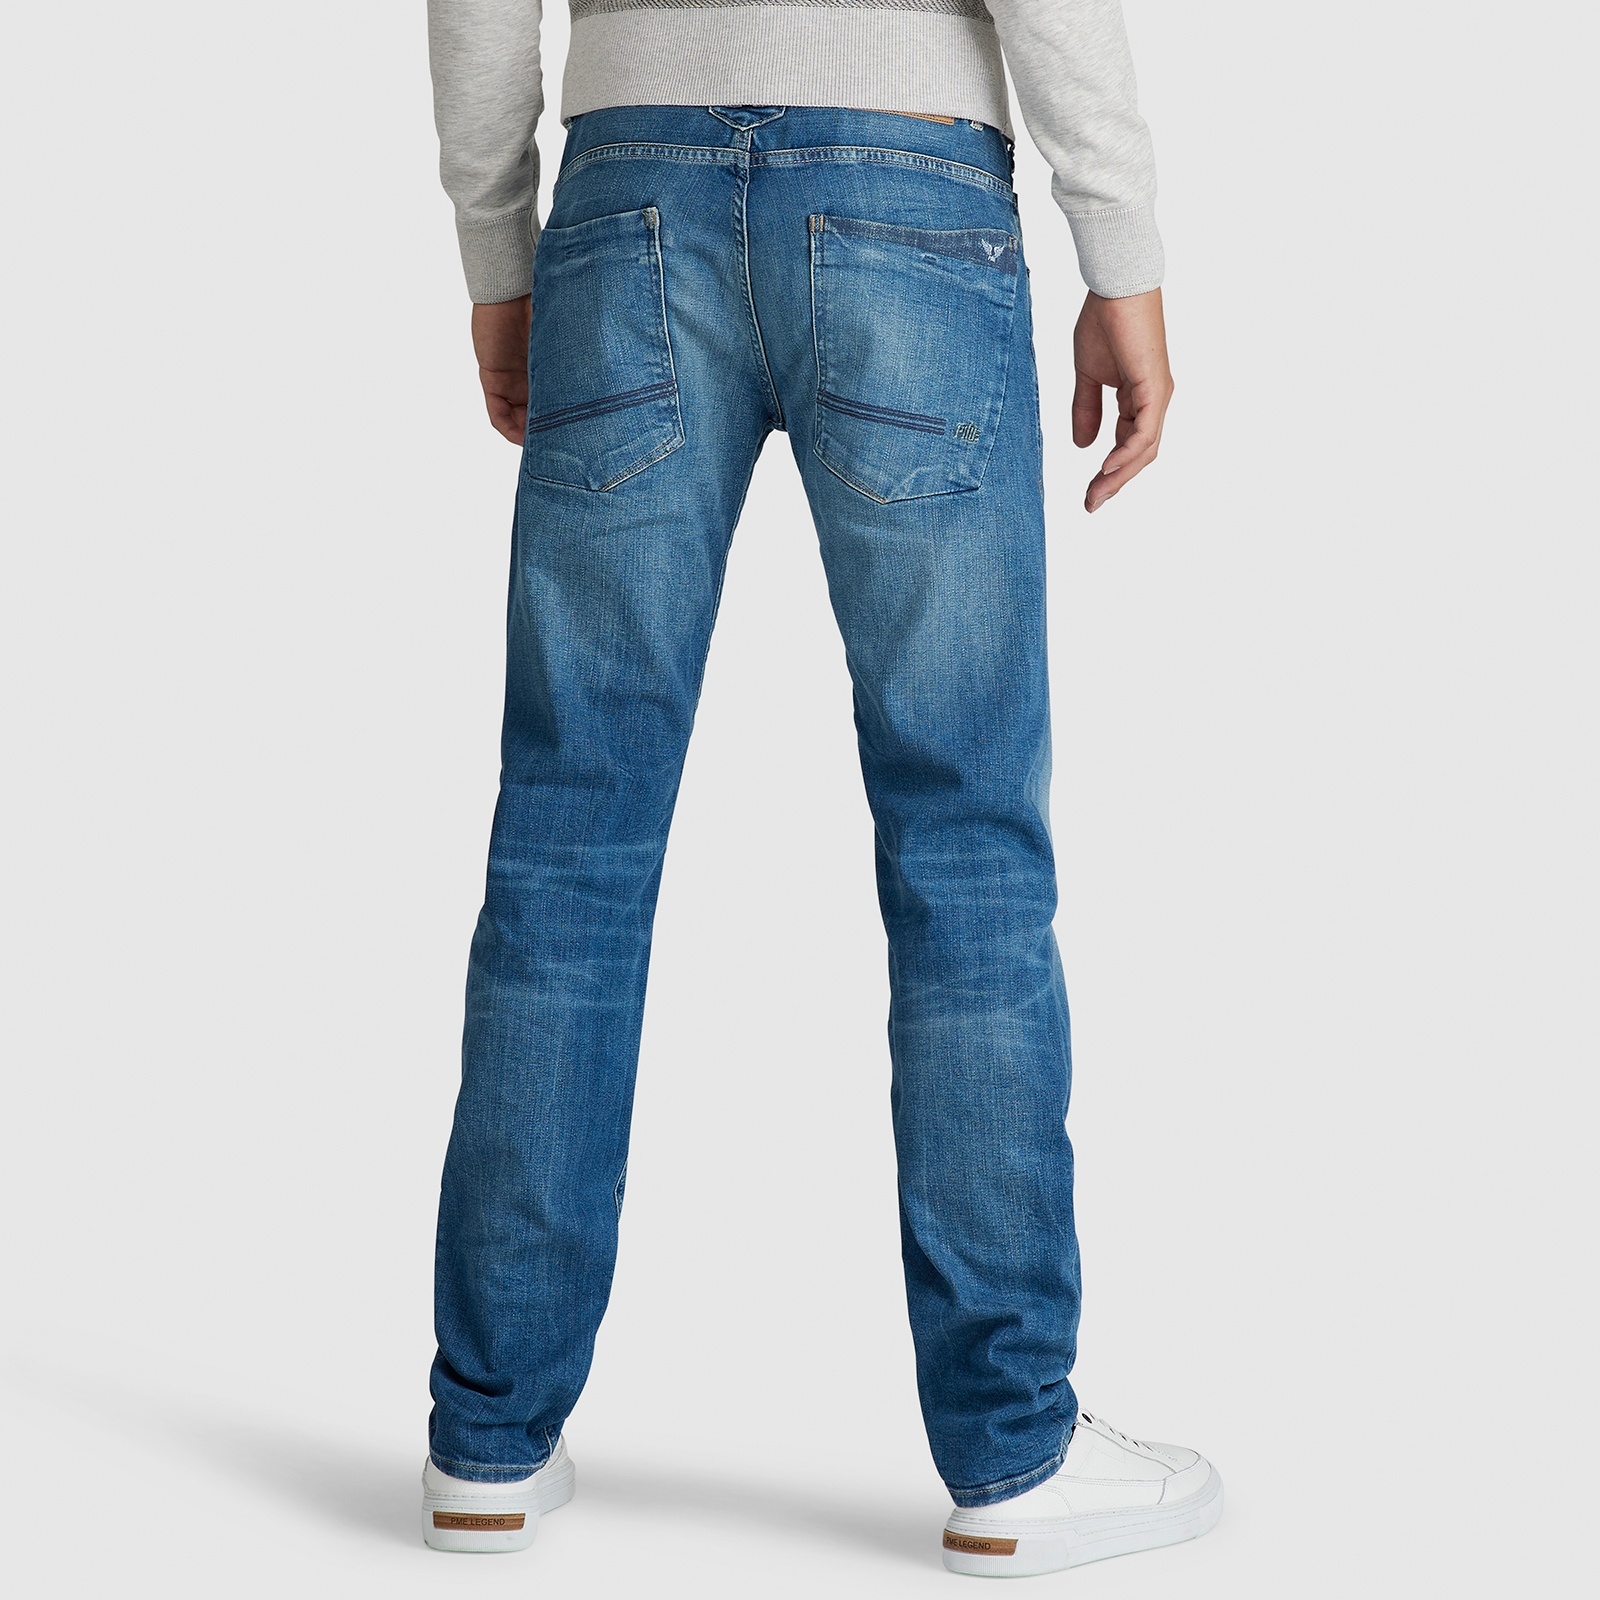 Boven hoofd en schouder Vrijstelling kruipen Gratis verzending! - PME Legend Straight Fit Commander 2 Jeans PTR985- -  Greenfield Fashion